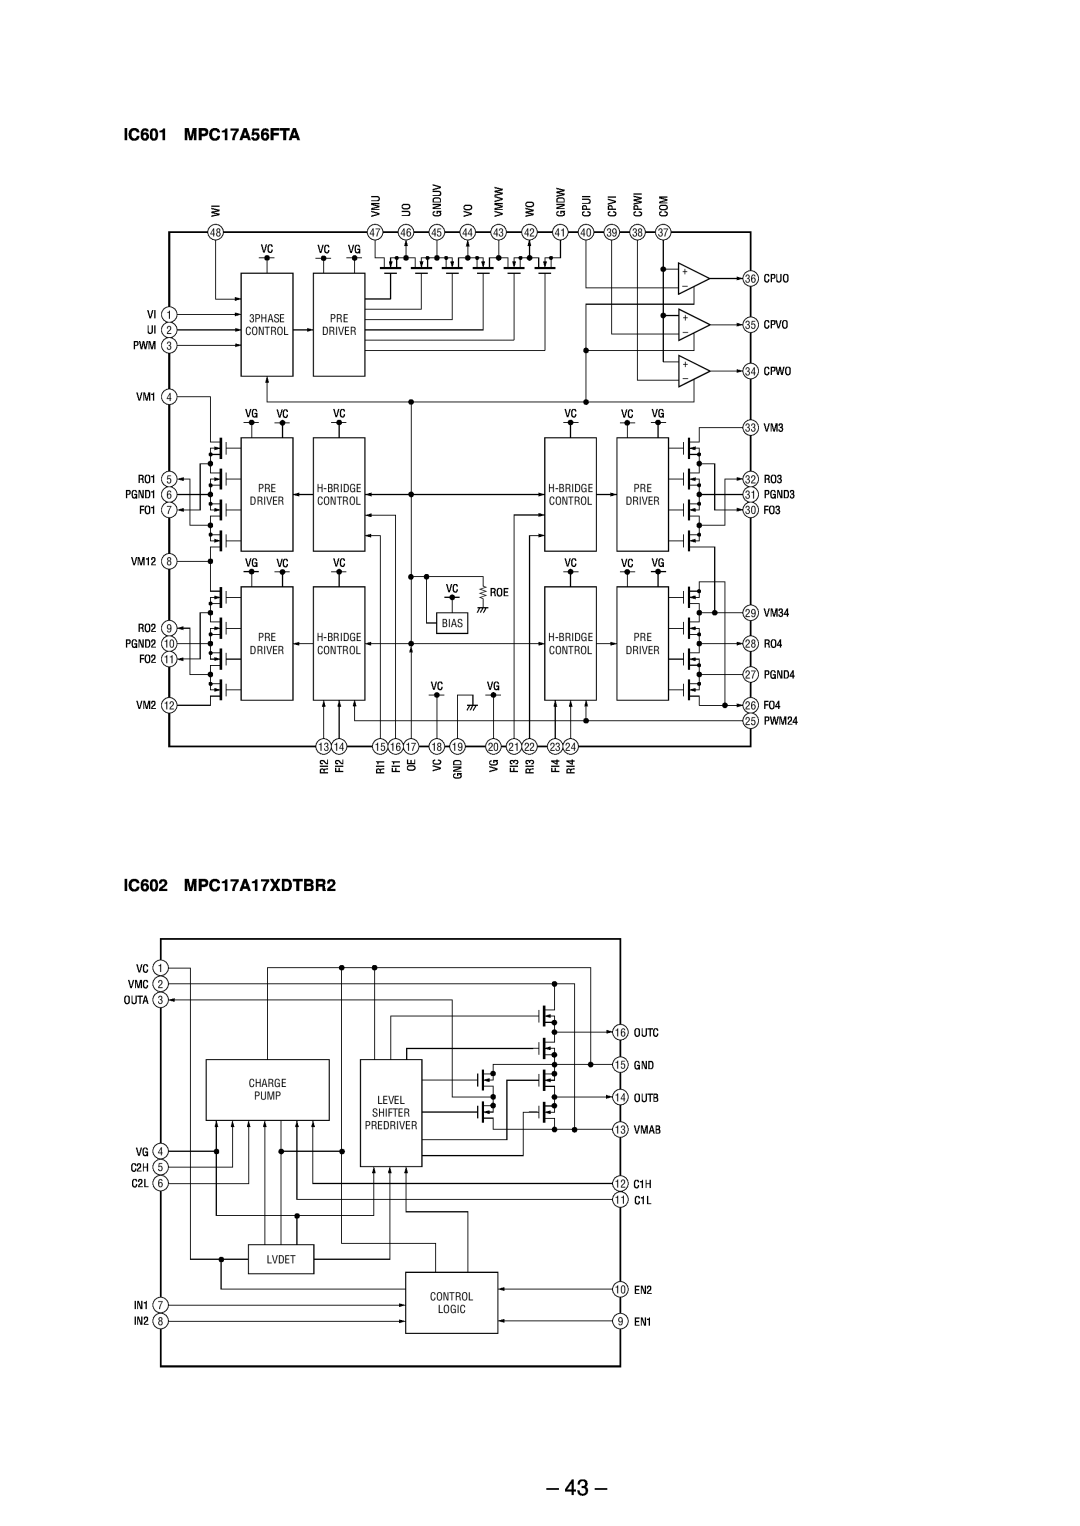 Sony MZ-R91 service manual IC601, MPC17A56FTA, IC602, MPC17A17XDTBR2 